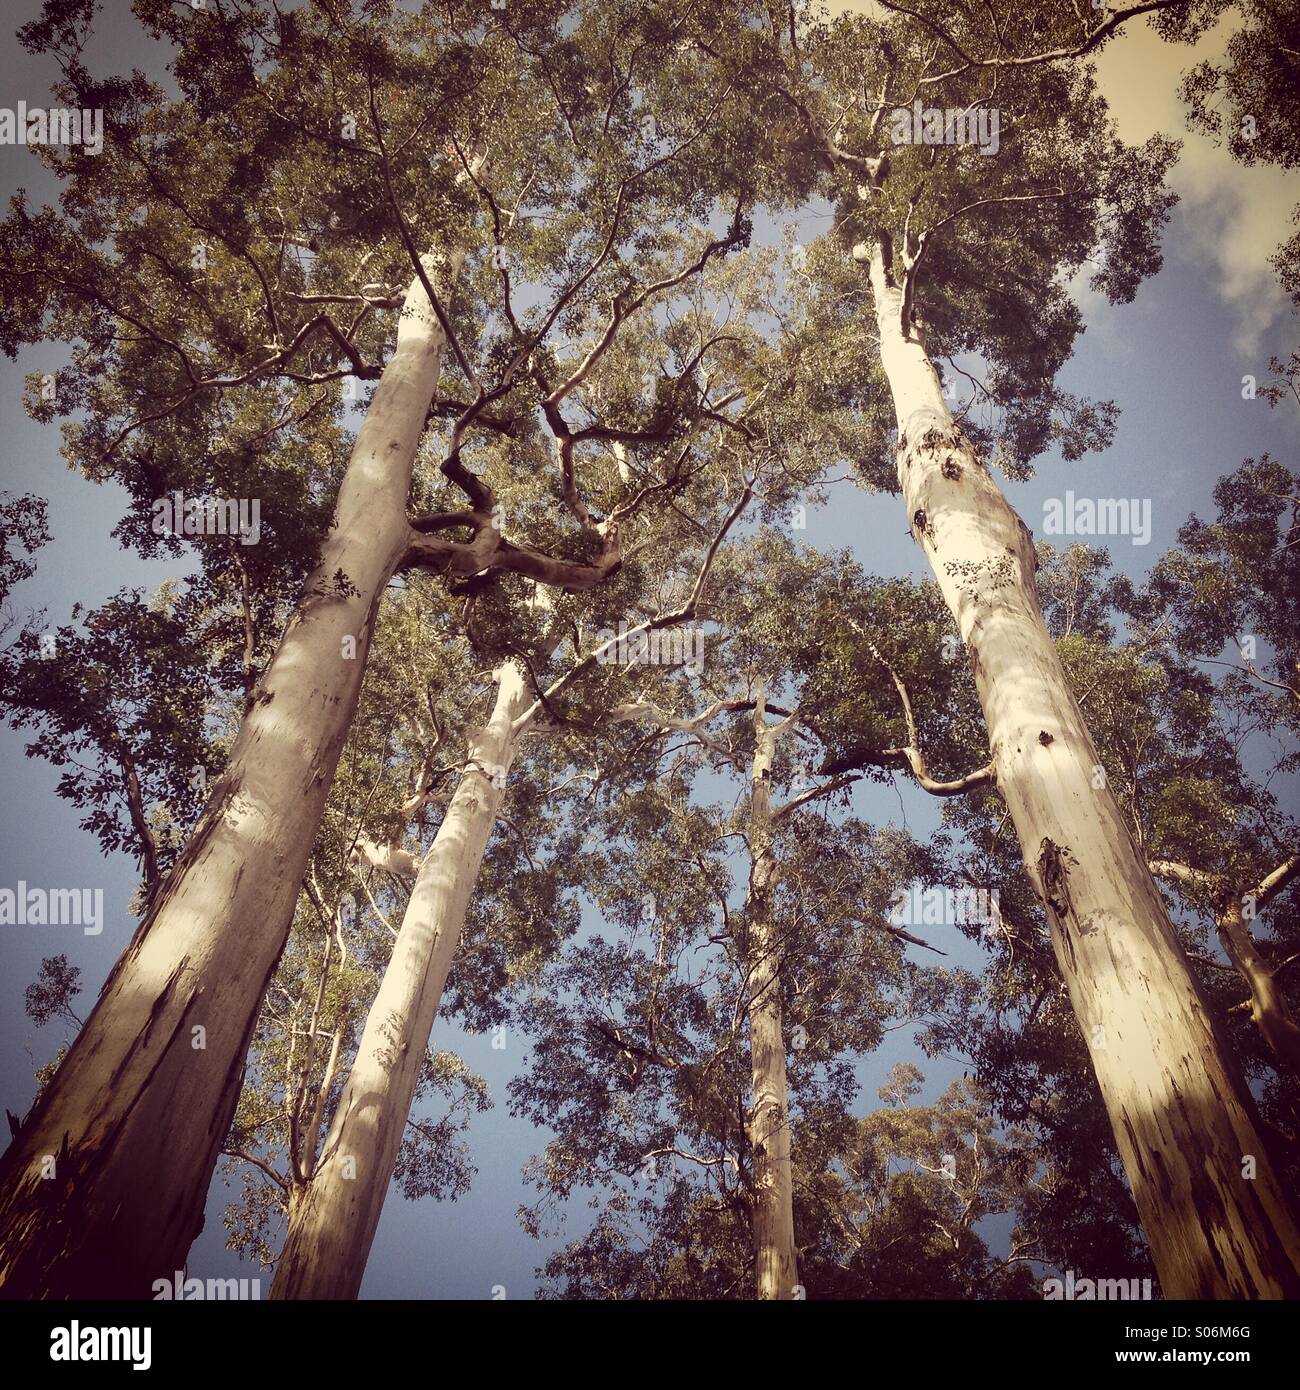 Giant 'Karri' trees, (Eucalyptus diversicolor). Big Tree Grove, nearly 300 feet tall. Western Australia Stock Photo